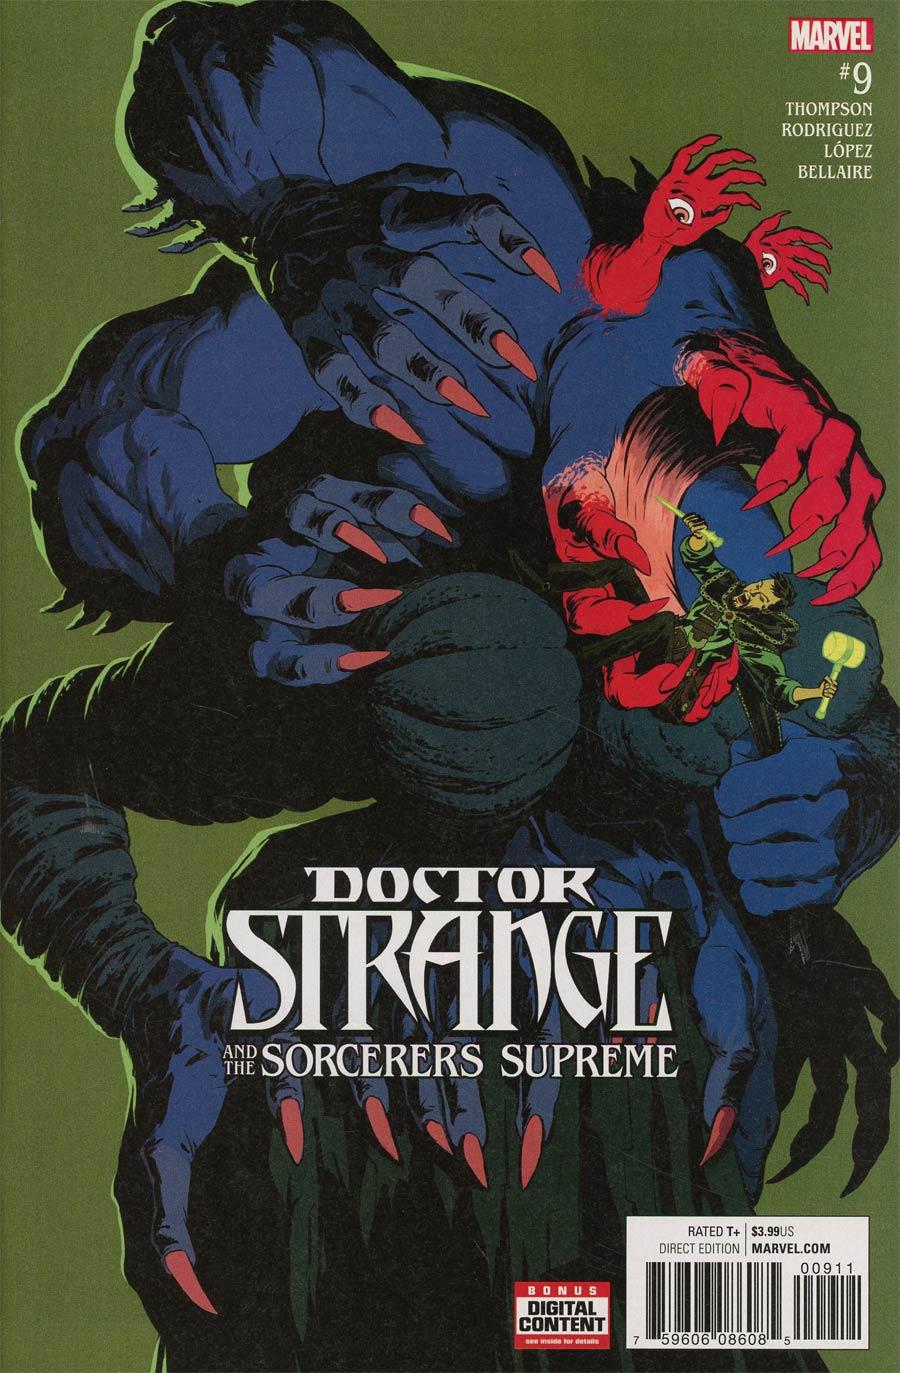 Doctor Strange And The Sorcerers Supreme Vol. 1 #9